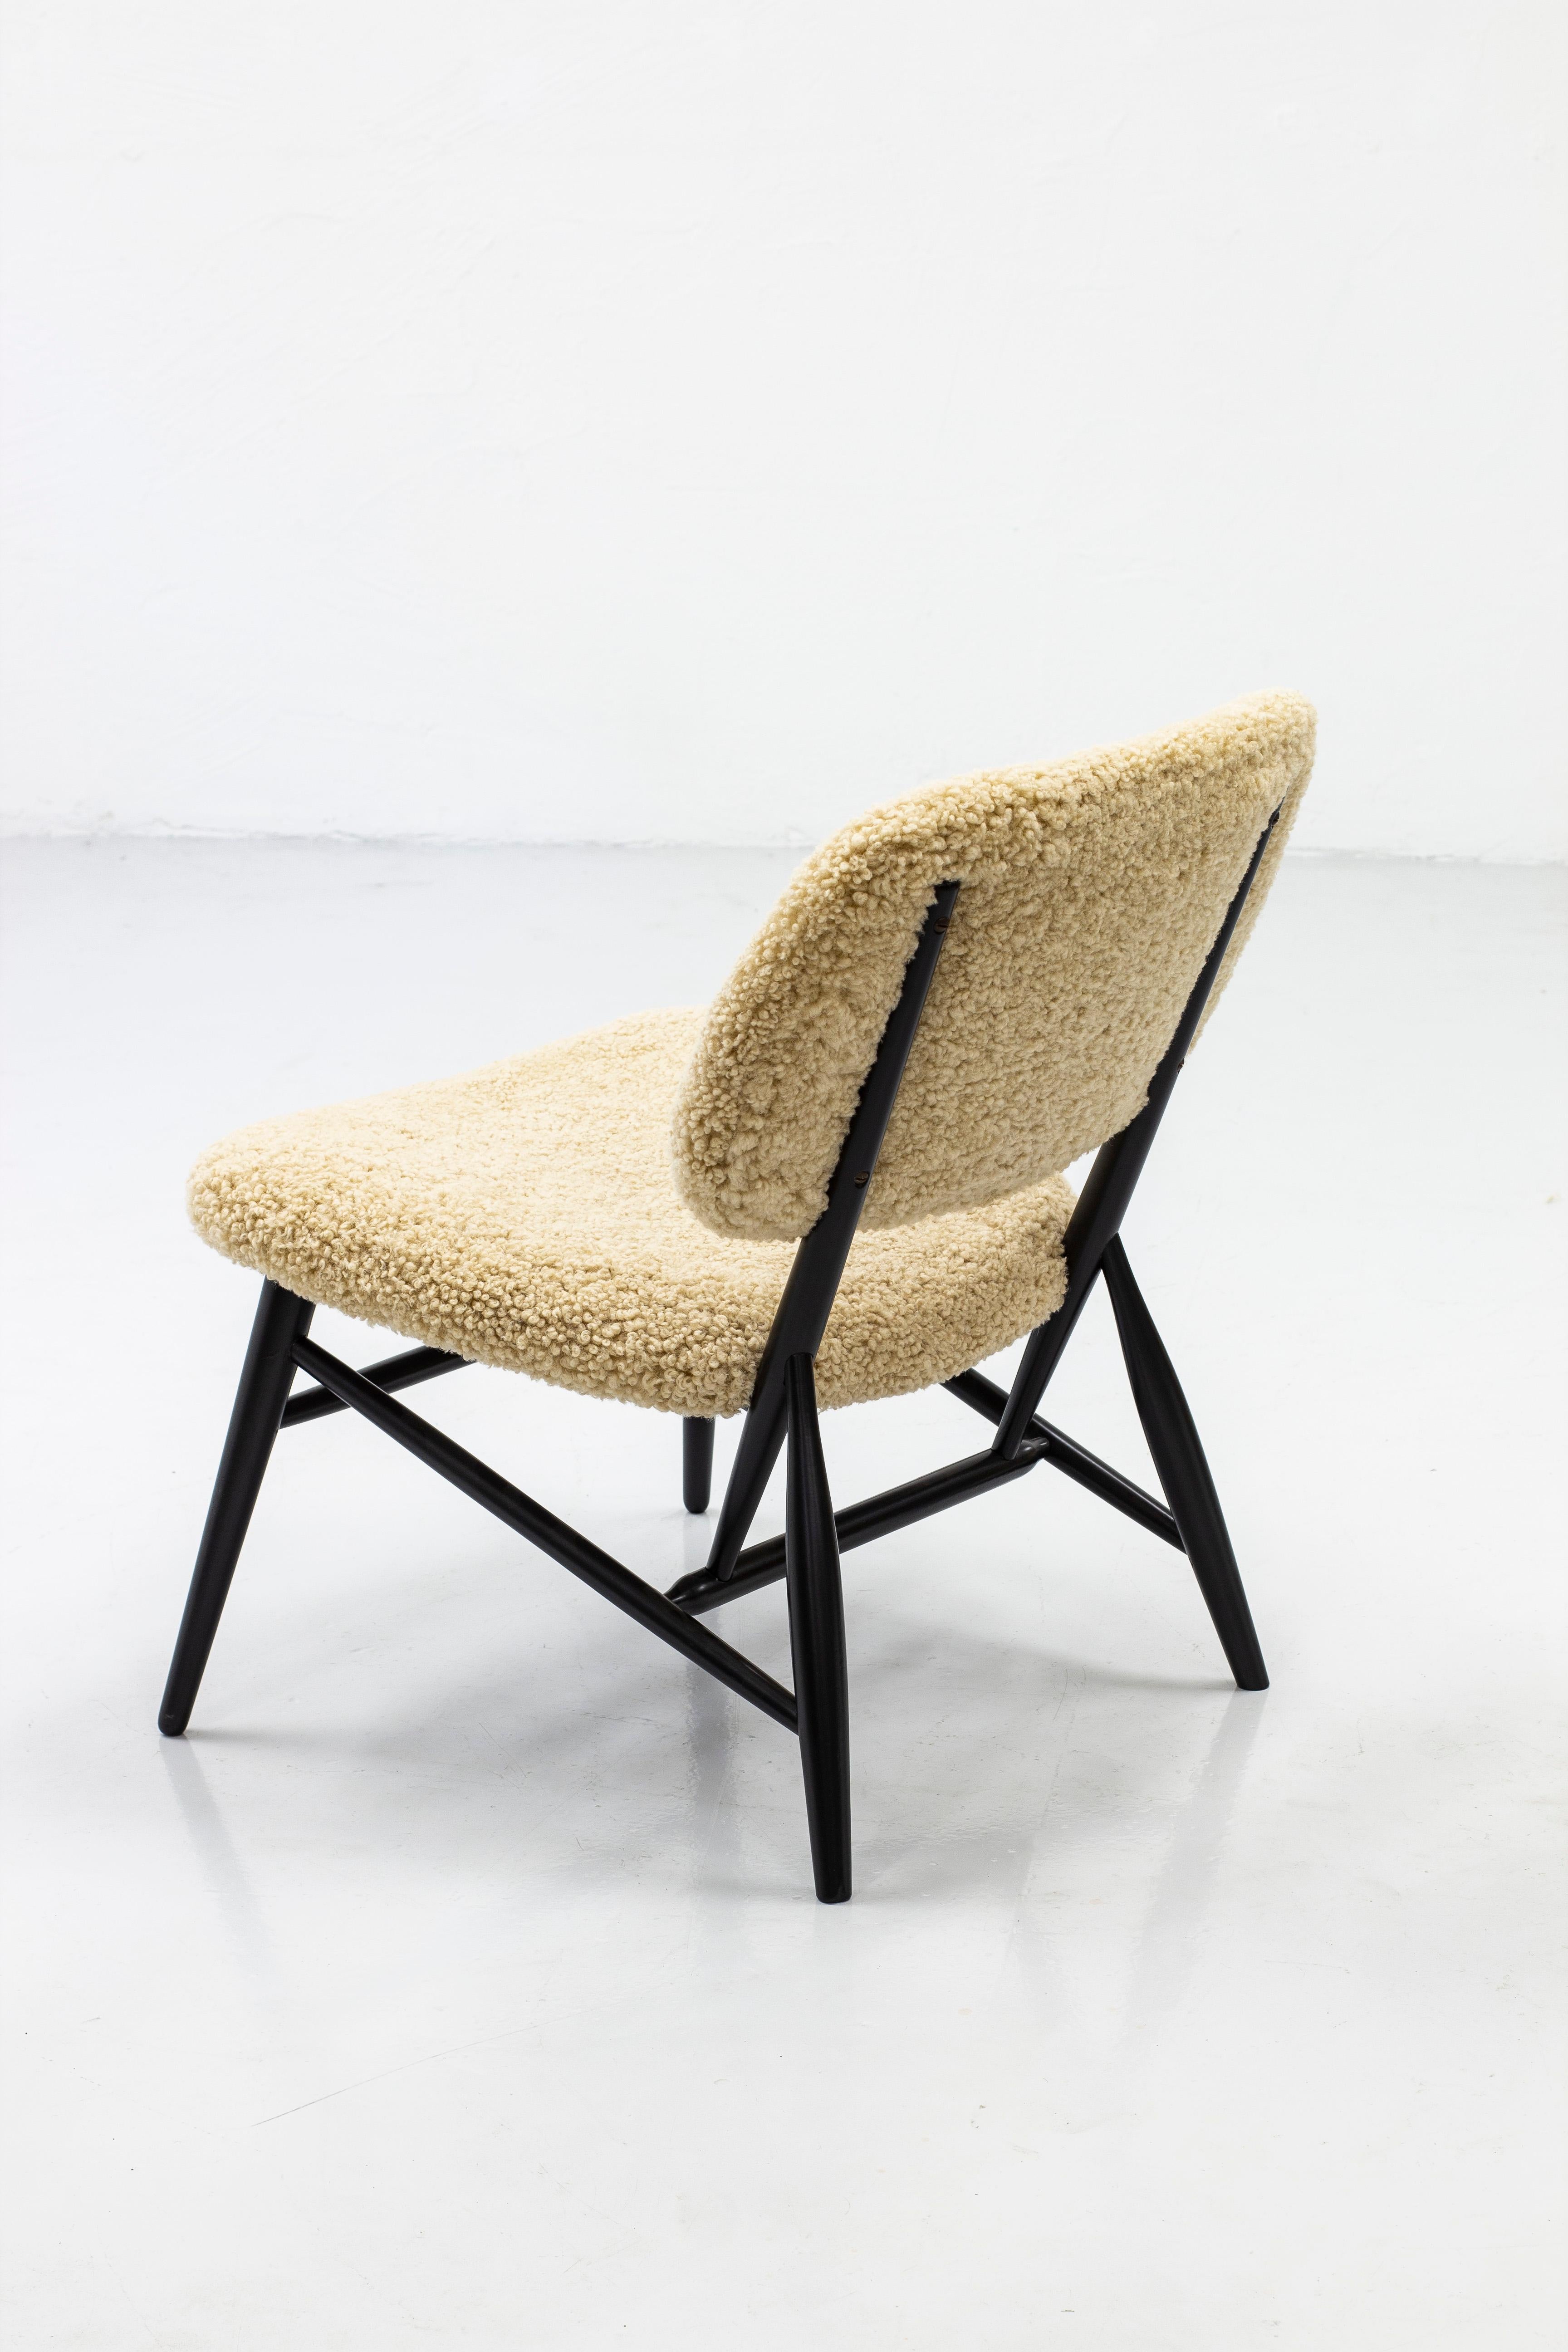 Sheepskin Lounge Chair with Sheep Skin by Slöjd & Möbler, in the Manner of Alf Svensson